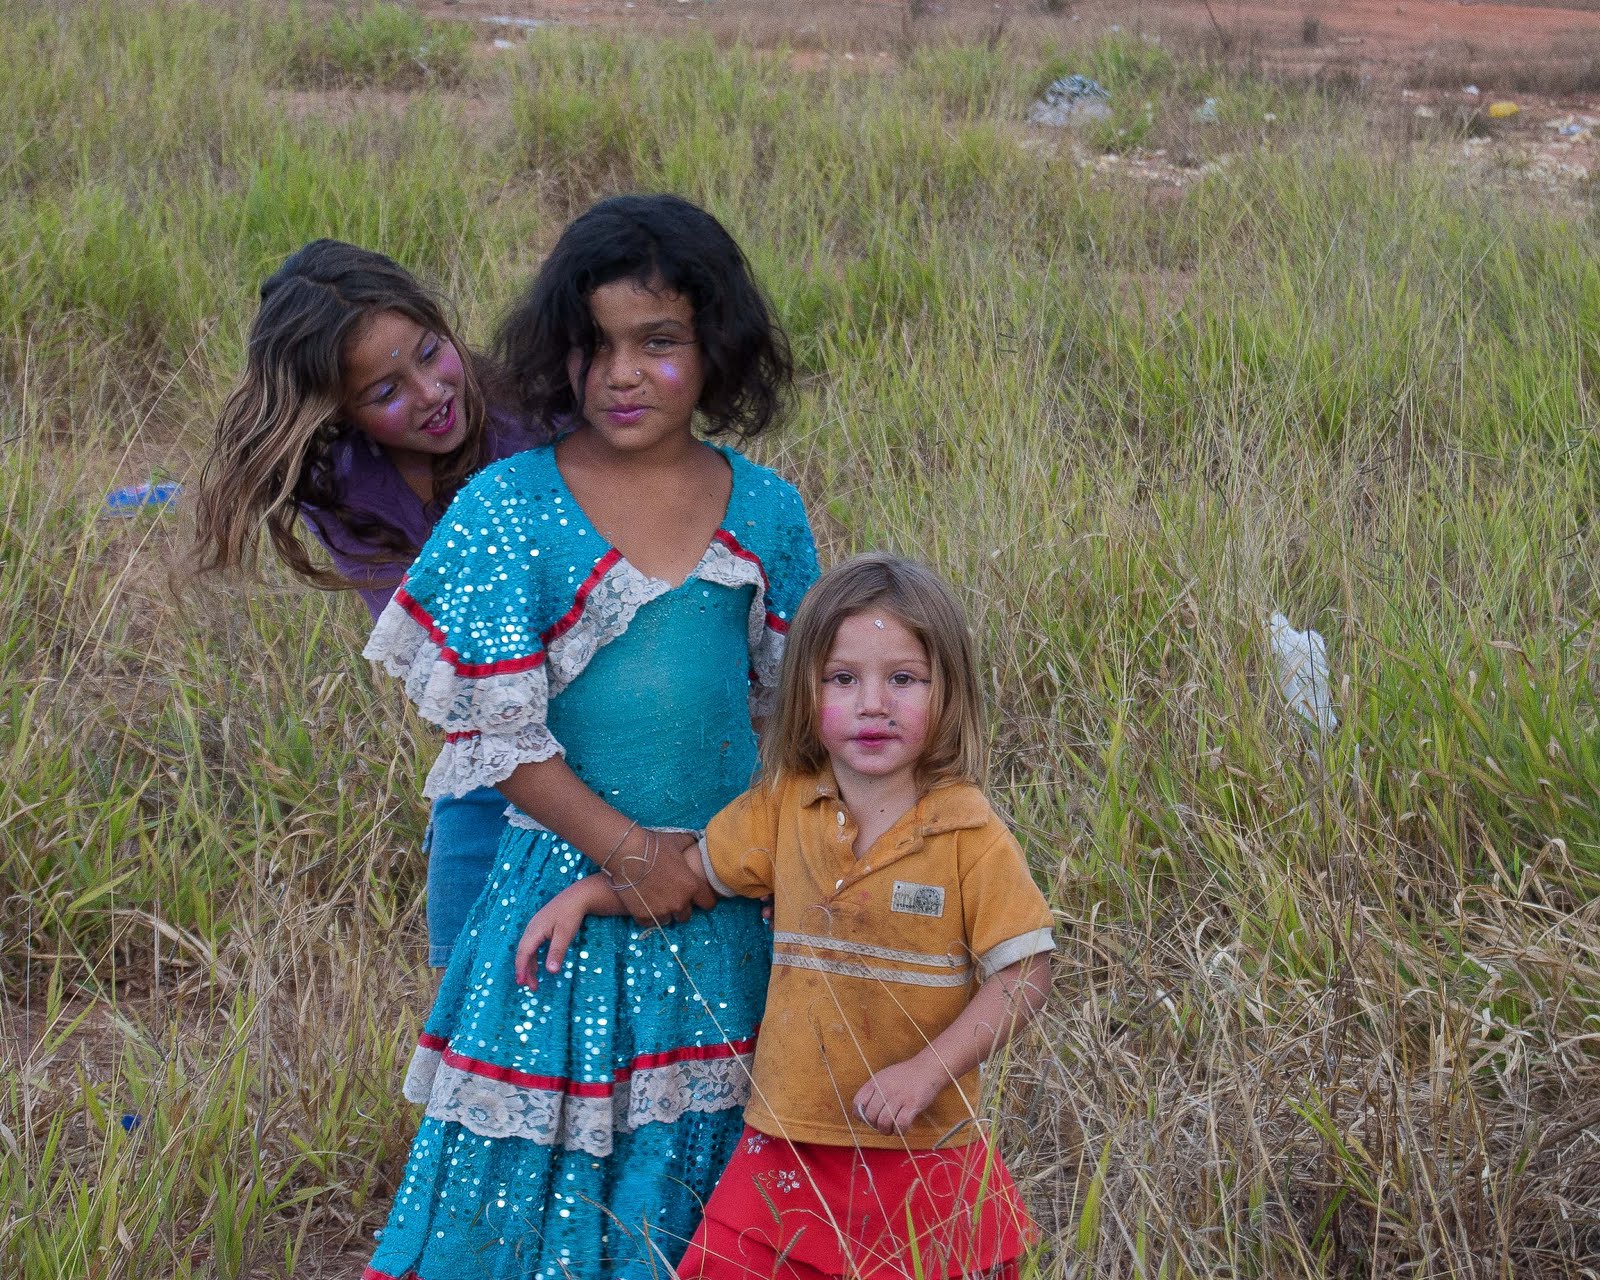 Todd's Traveling Tales: Gypsies of Minas Gerais